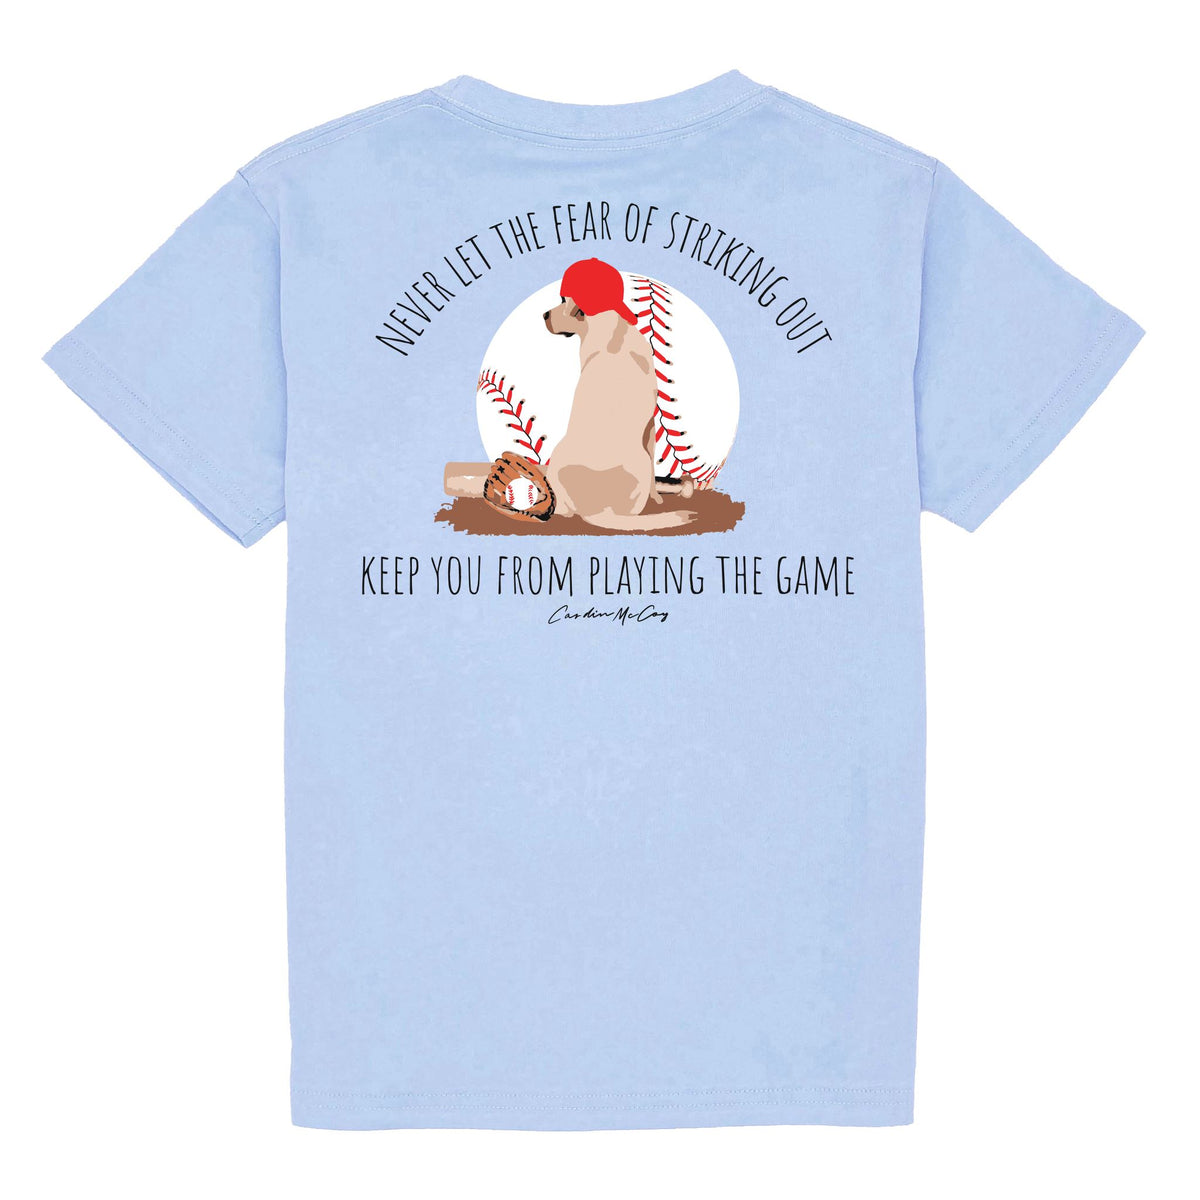 Kids' Never Let the Fear Short Sleeve Pocket Tee Short Sleeve T-Shirt Cardin McCoy Light Blue XXS (2/3) 